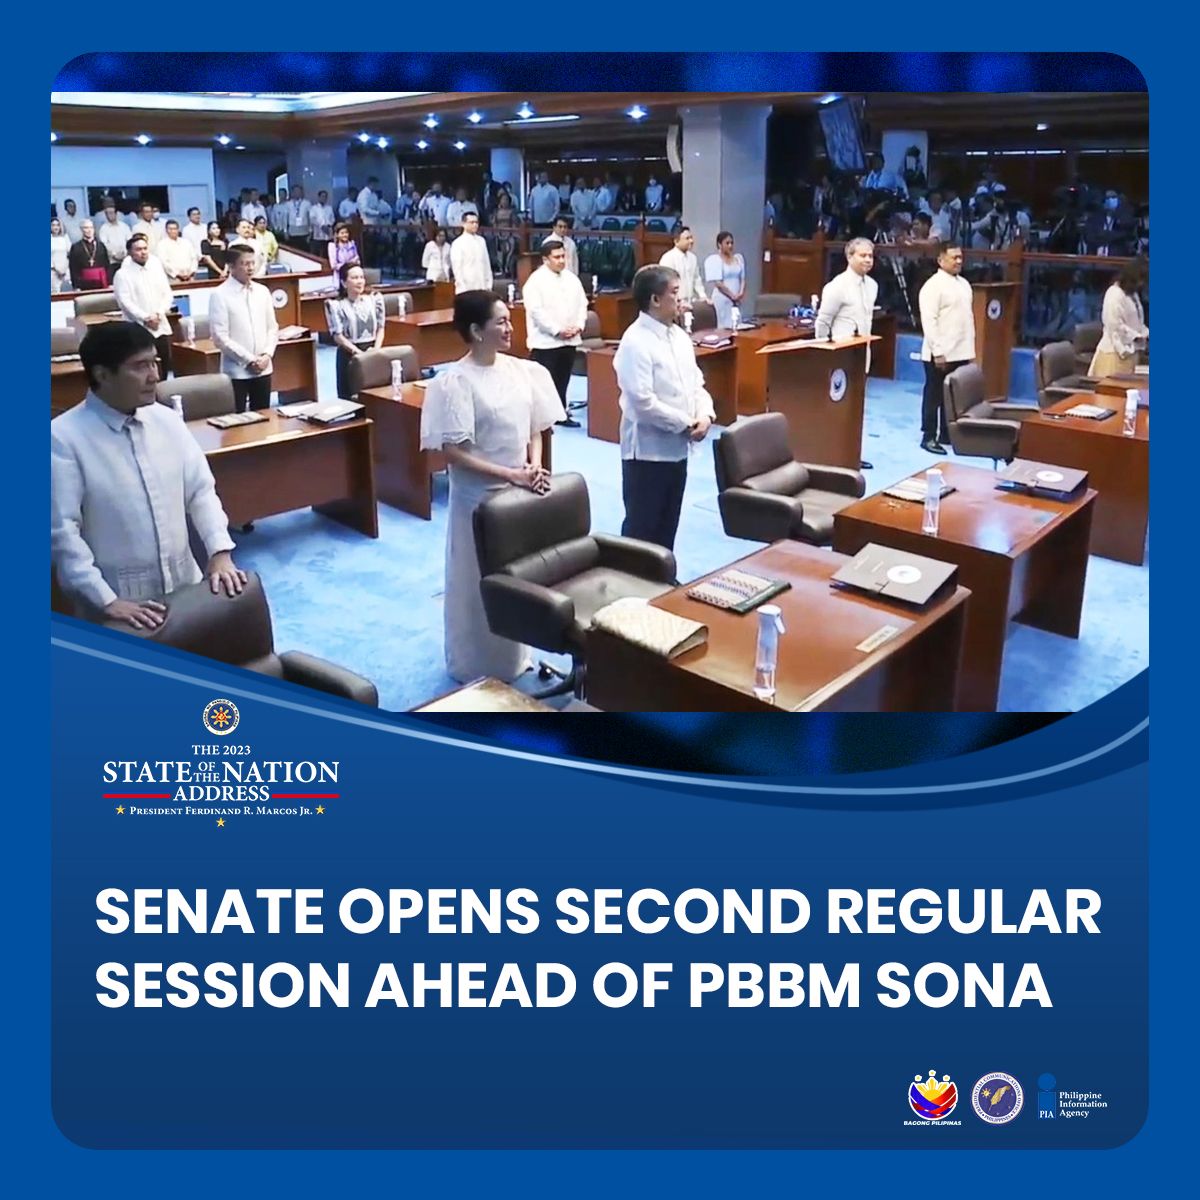 Senate Opens Second Regular Session ahead of PBBM SONA Presidential